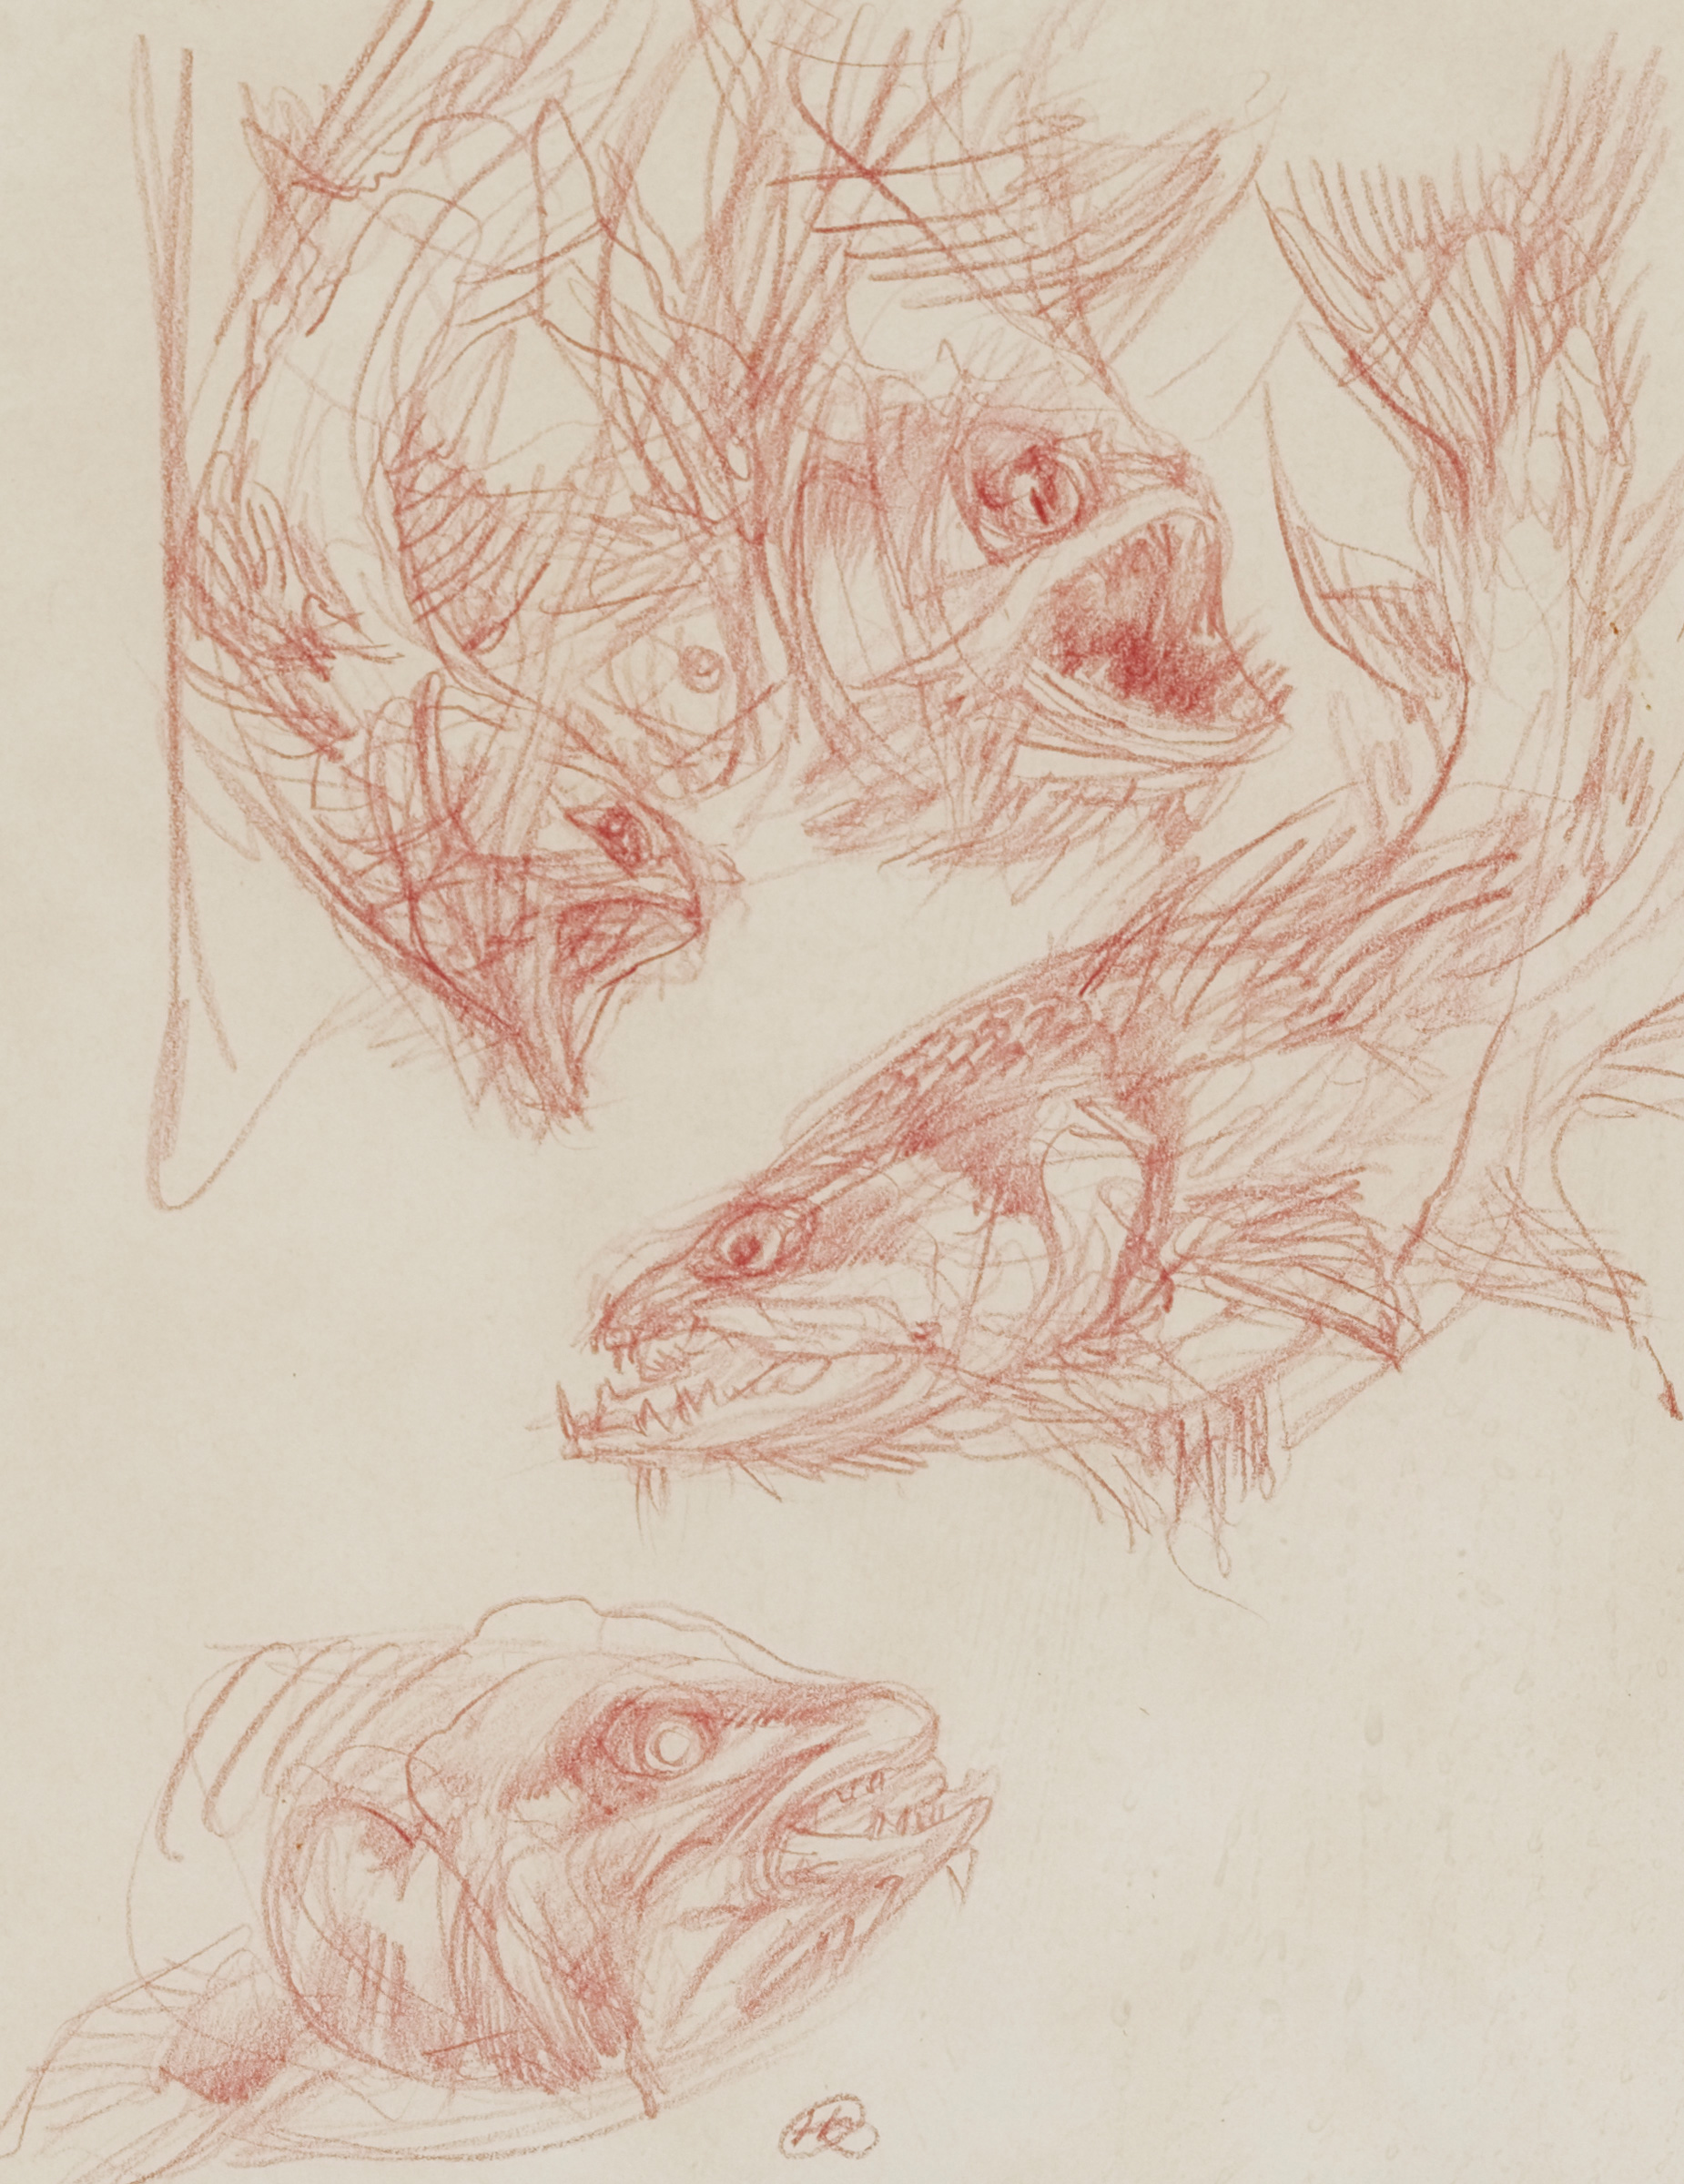 Fish Sketch (c. 1960)